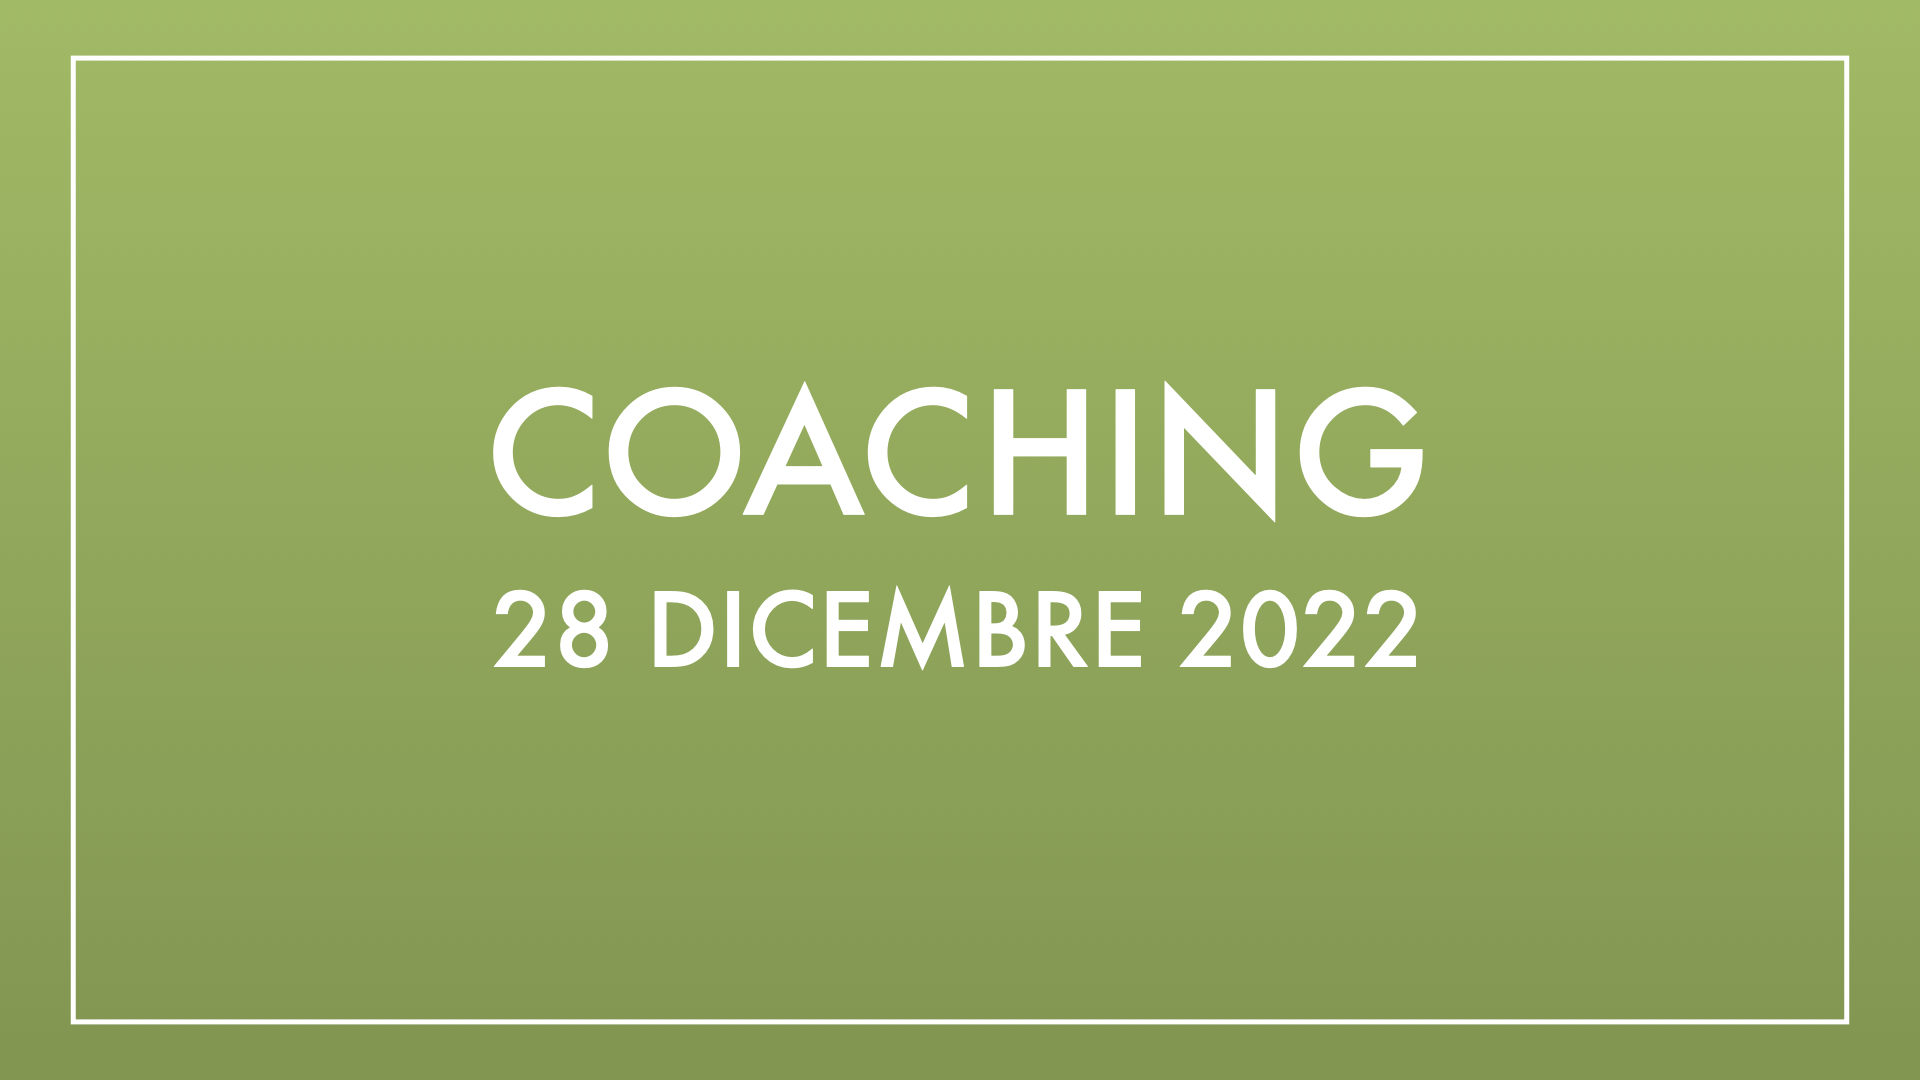 Coaching 28 dicembre 2022